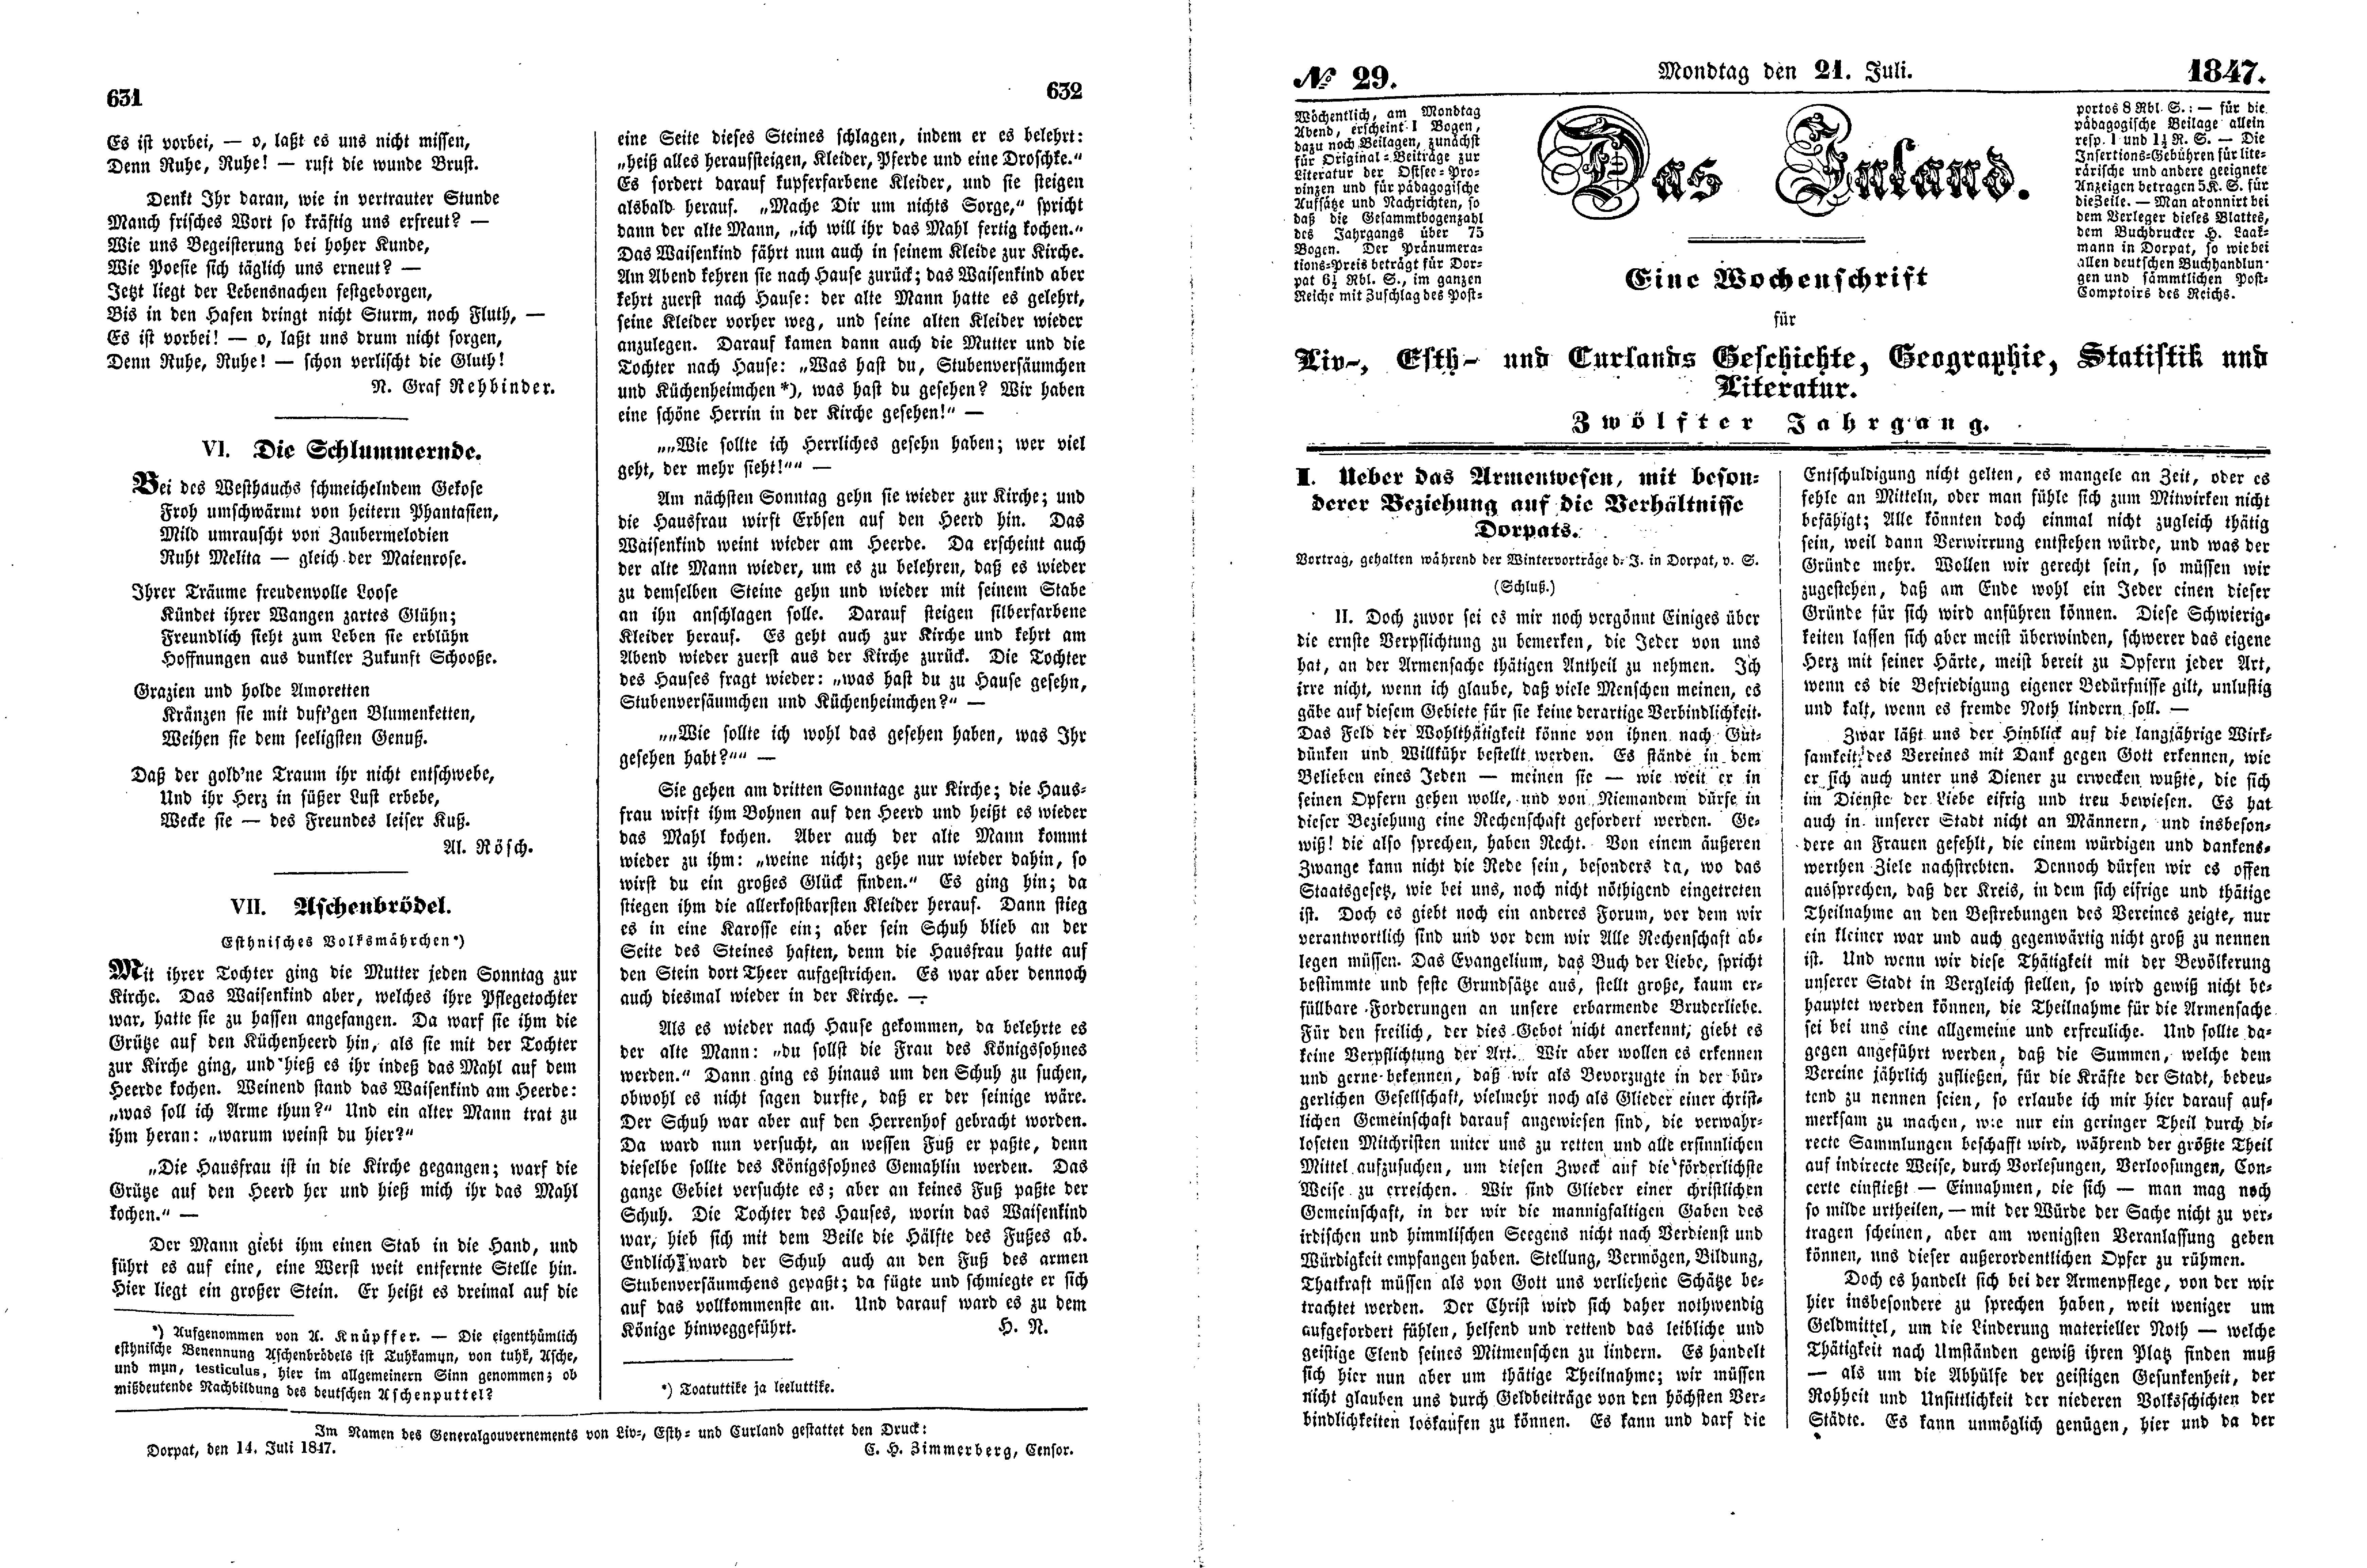 Aschenbrödel (1847) | 1. (631-634) Main body of text